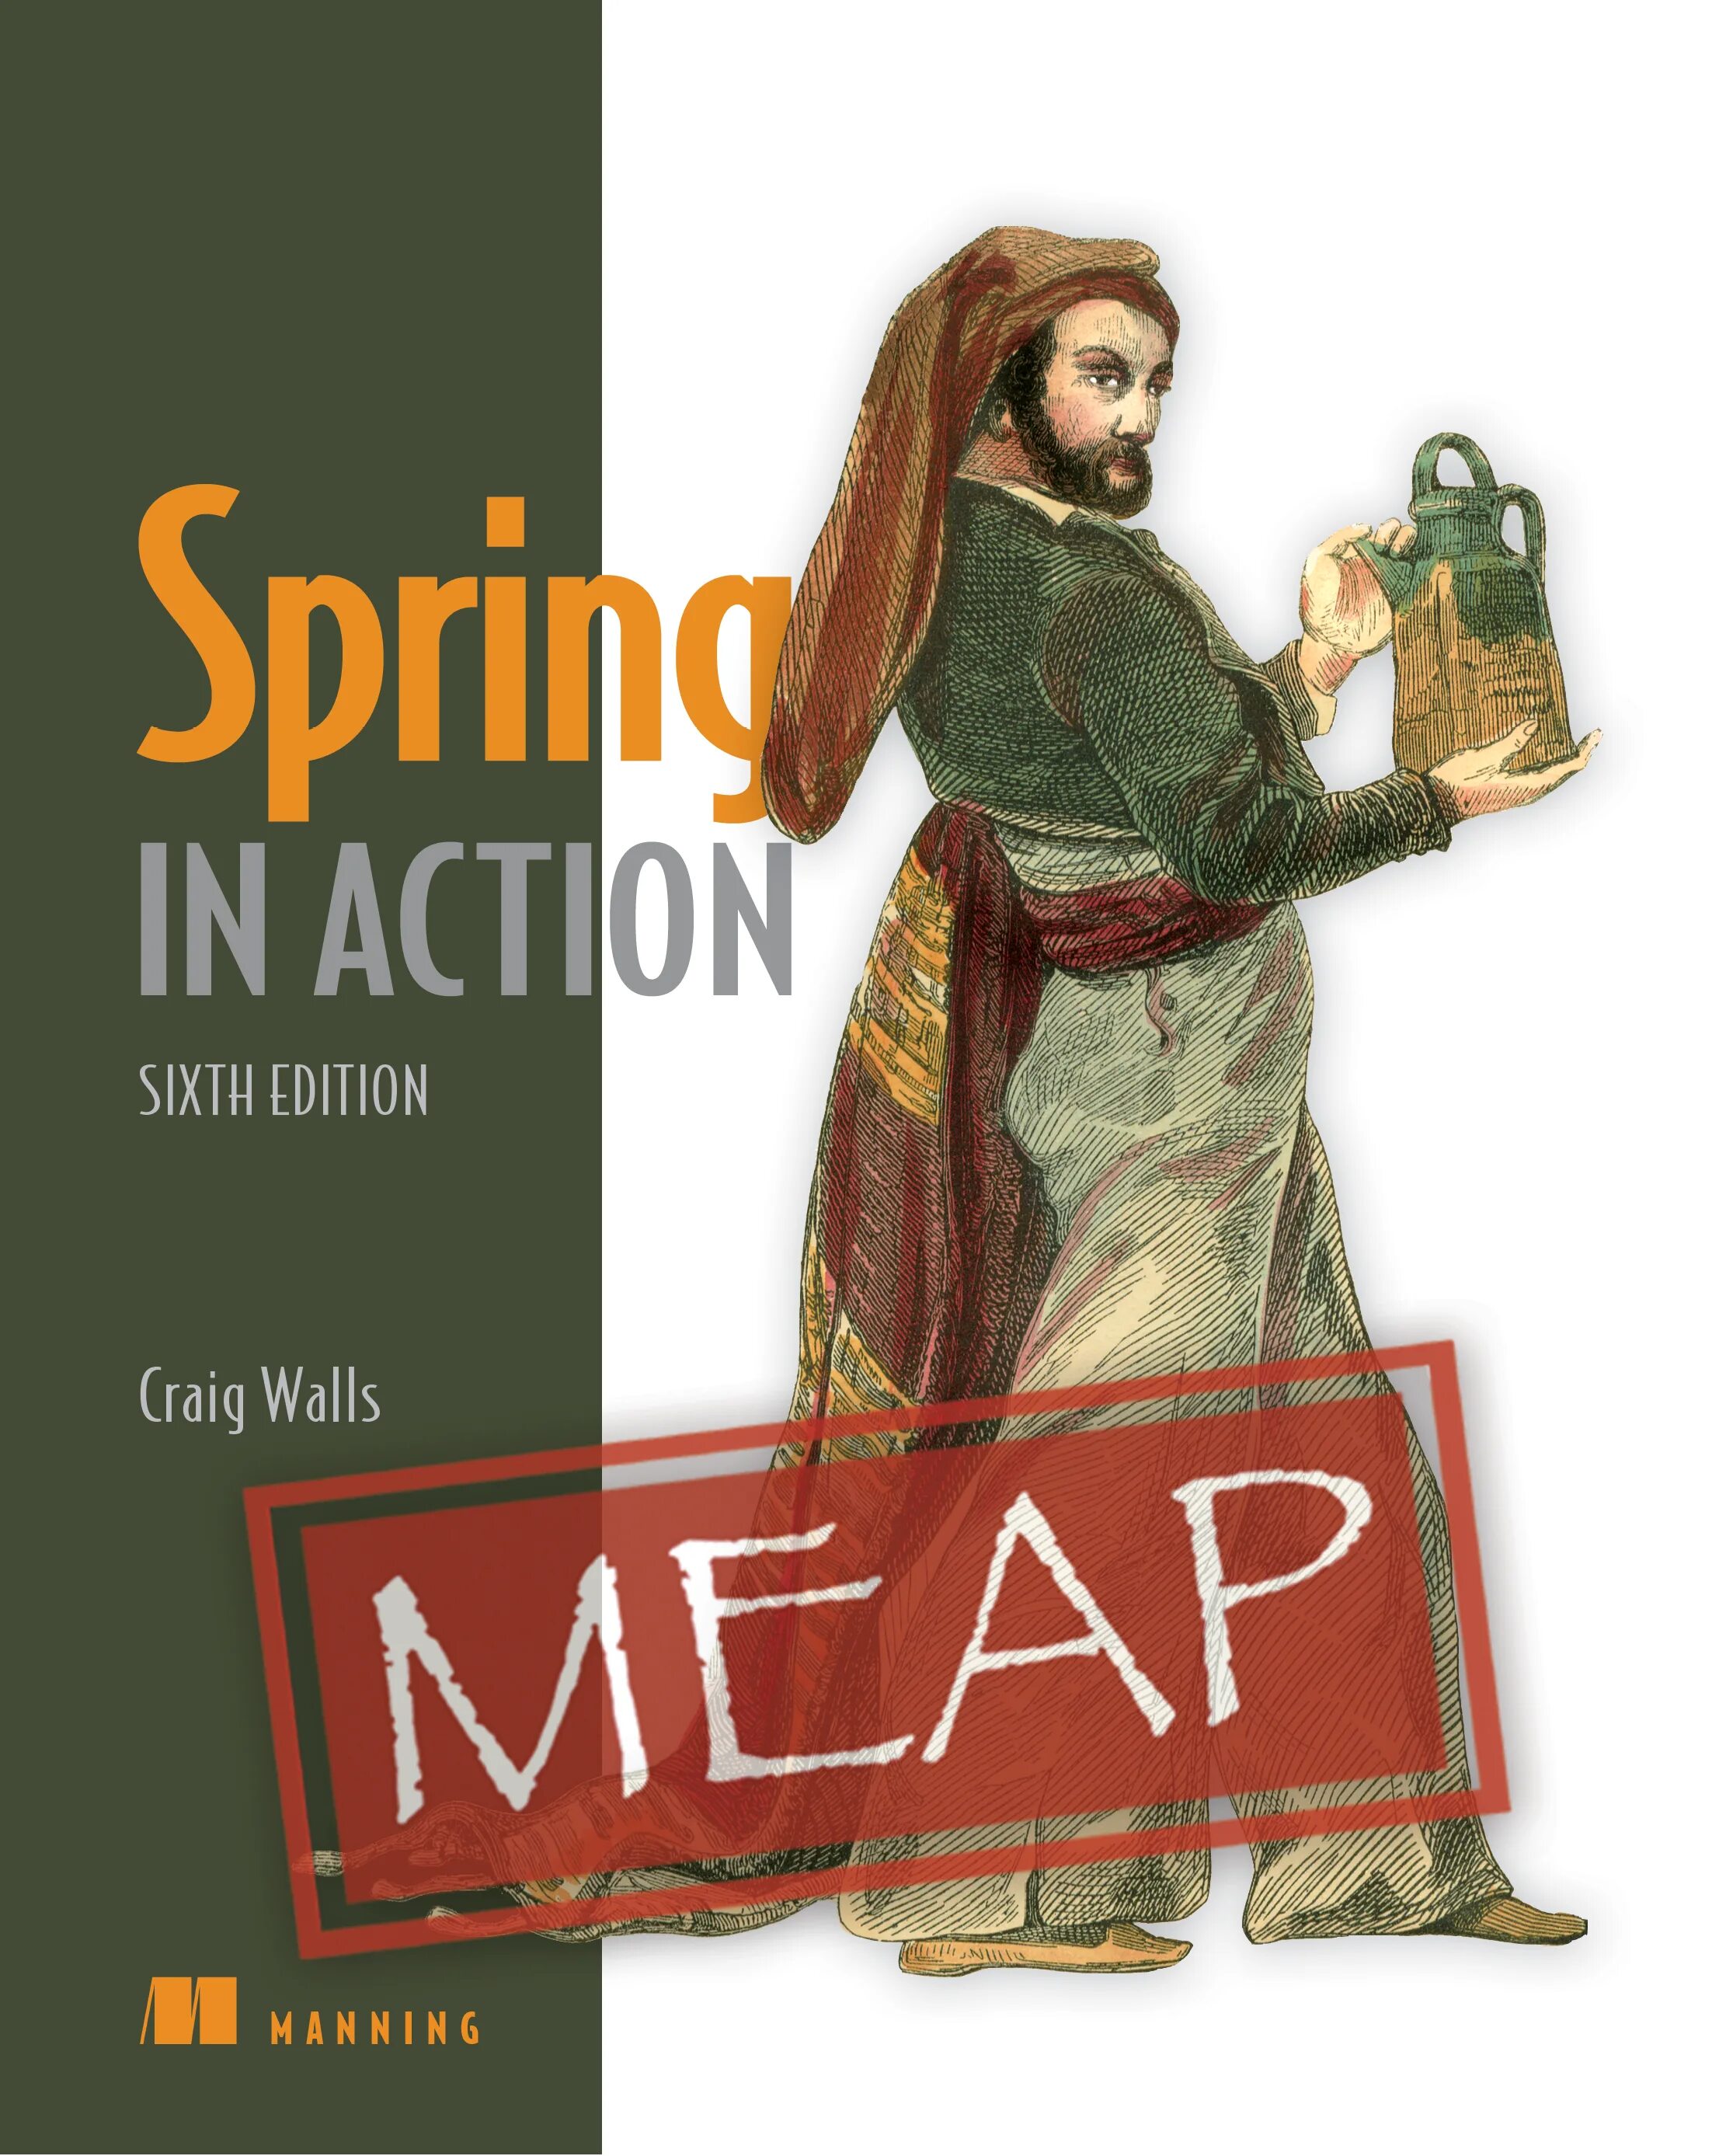 Vi edition. Spring in Action 6 издание. Spring in Action sixth Edition. Manning Издательство. Книга Spring java.